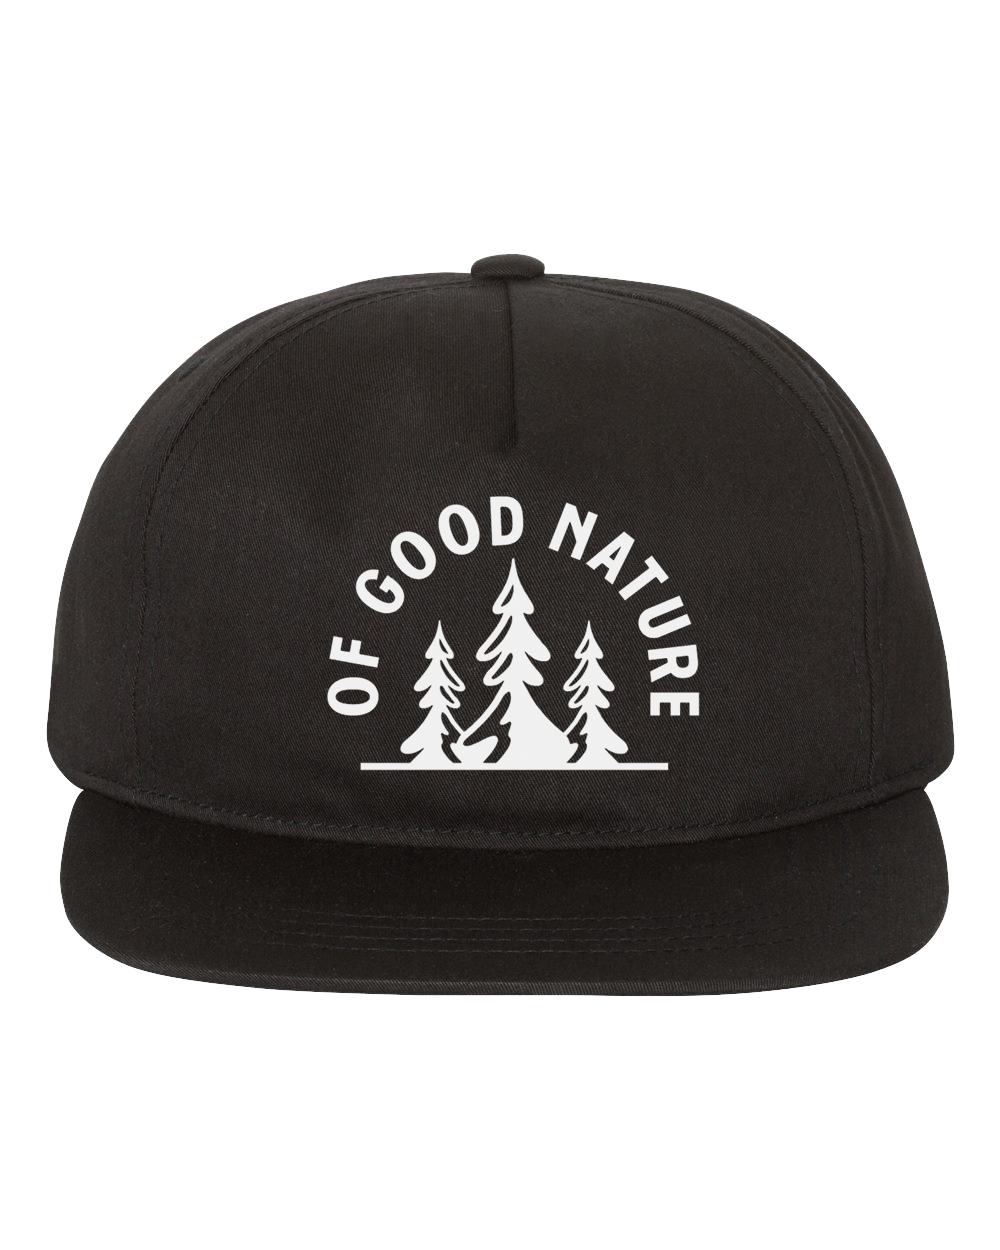 Of Good Nature Snapback Hat